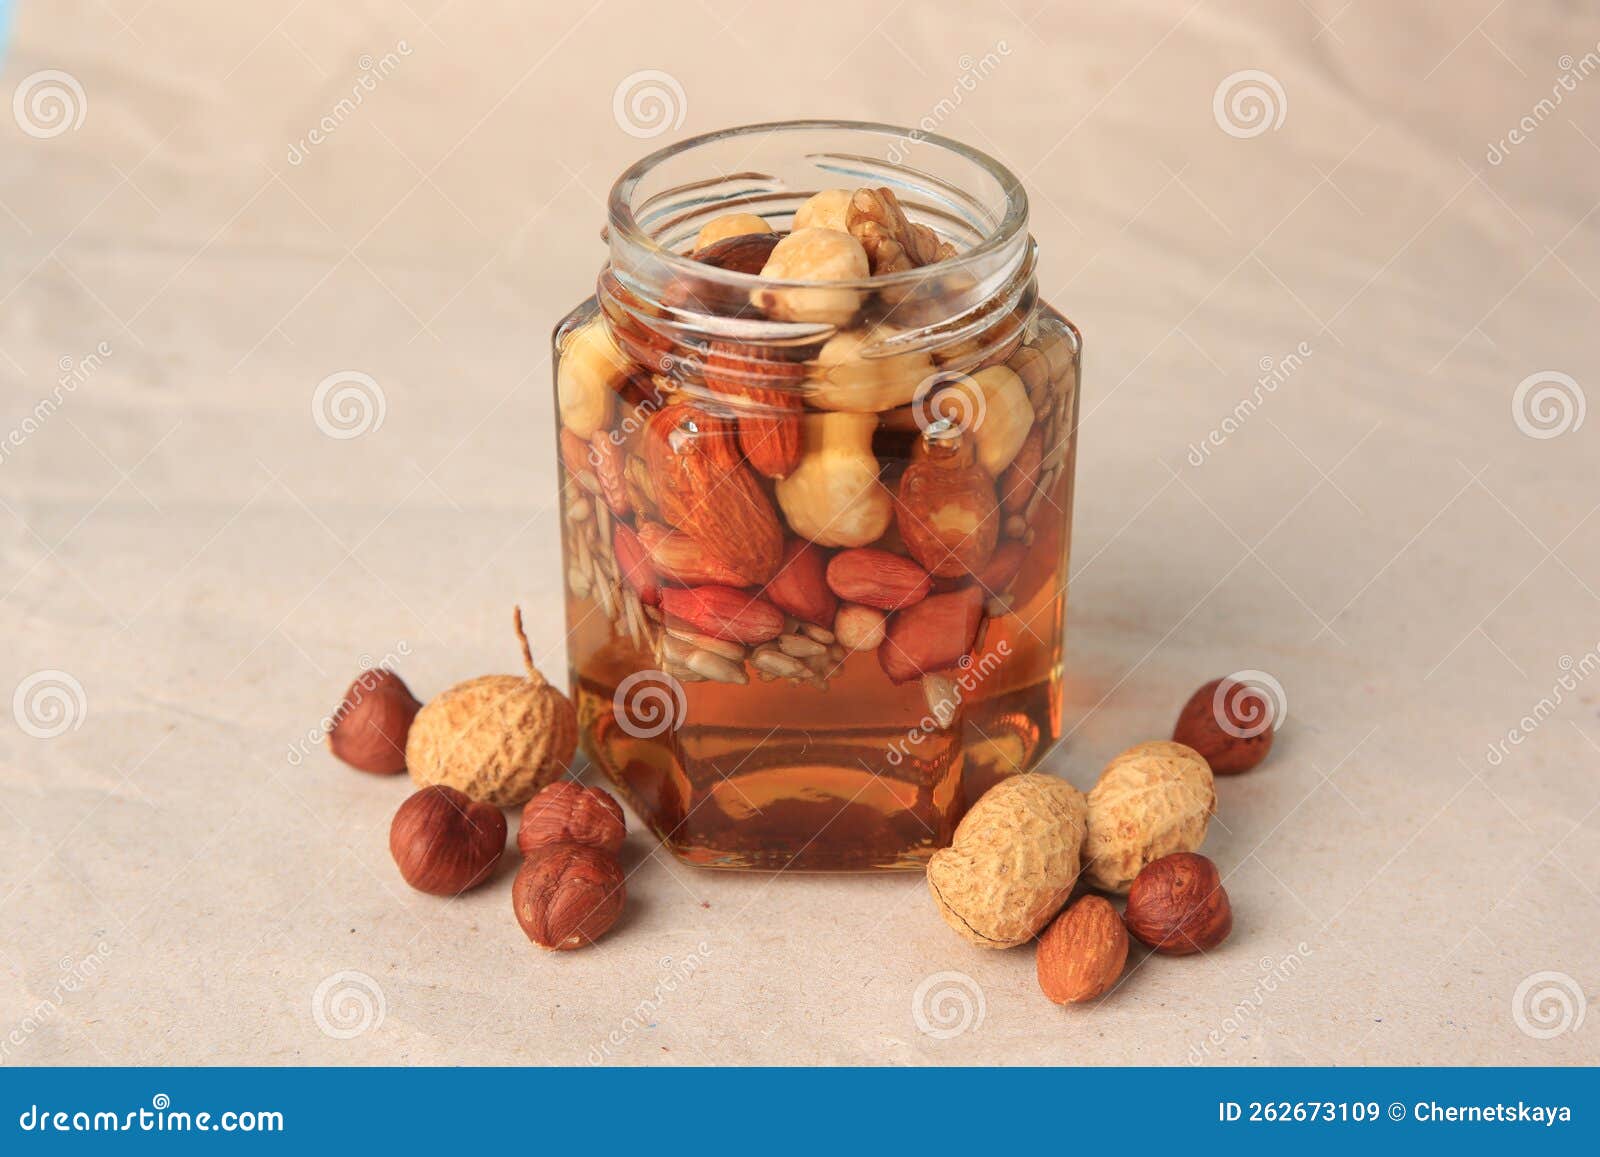 443 Various Nuts Honey Jar Stock Photos - Free & Royalty-Free Stock Photos  from Dreamstime